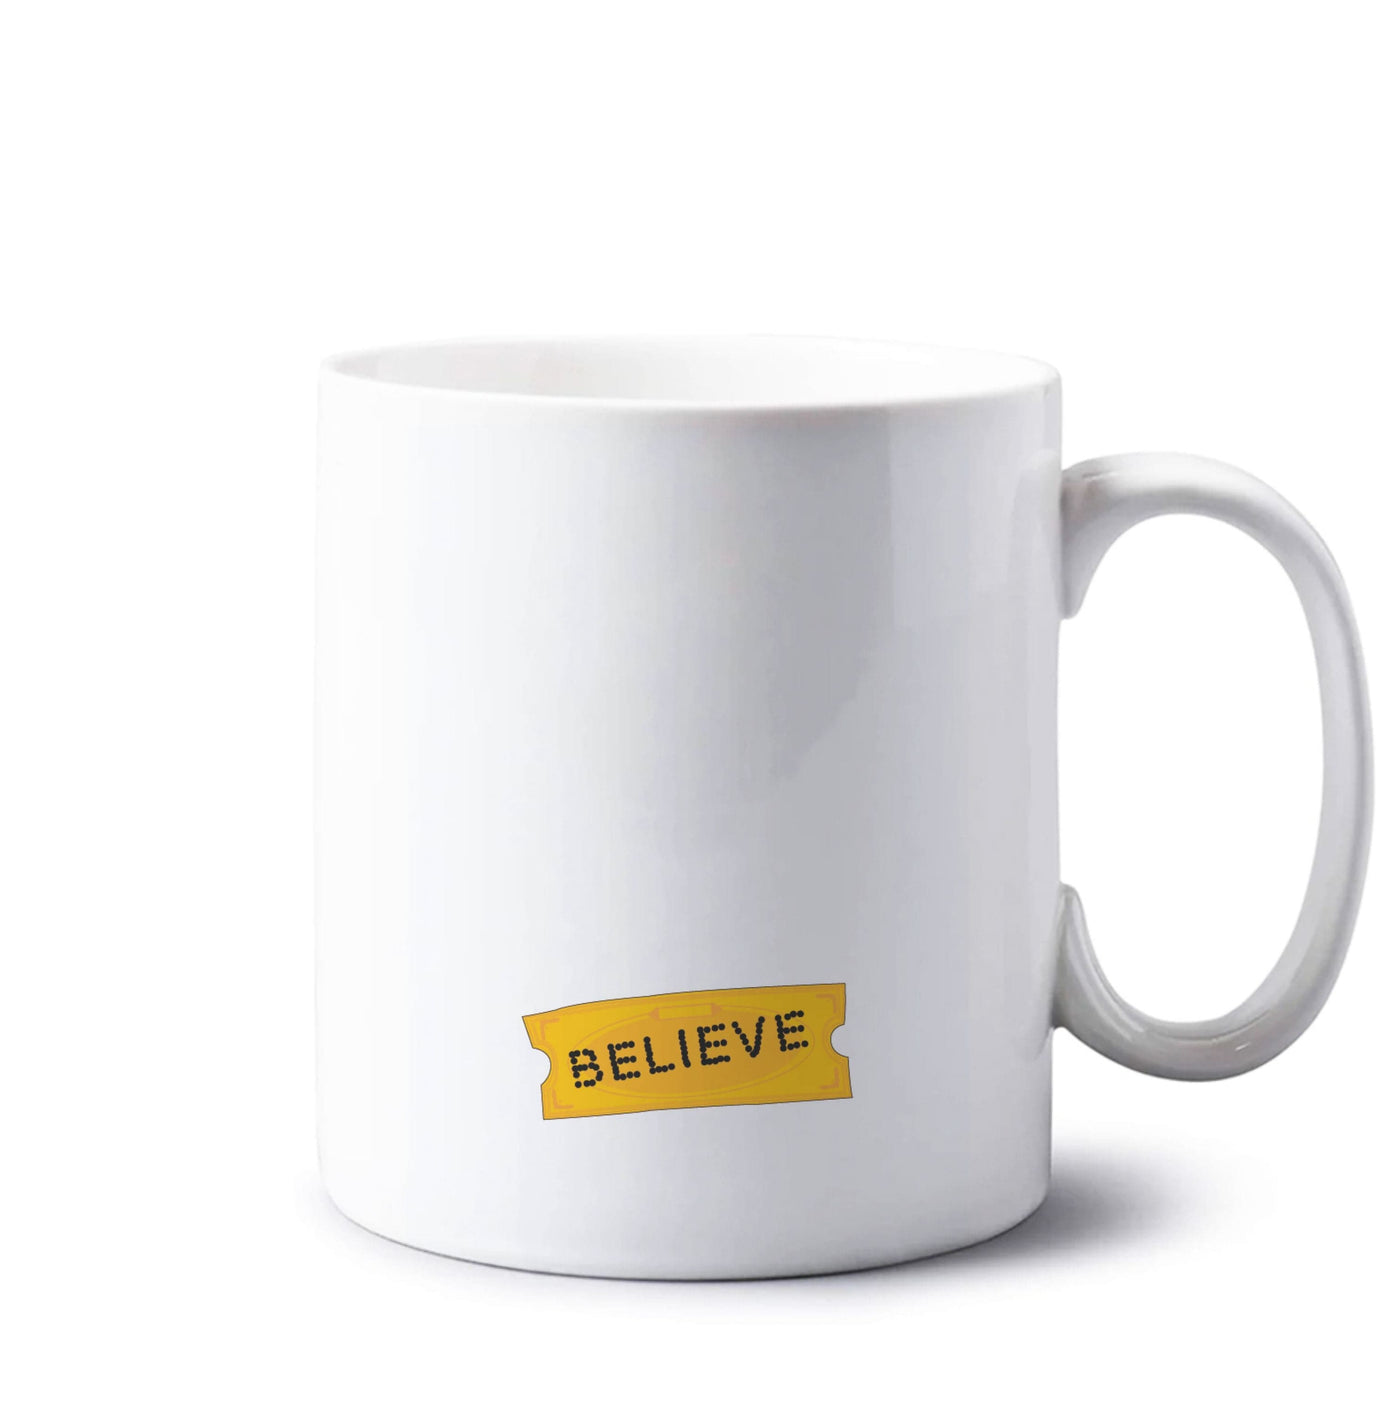 Believe - Polar Express Mug